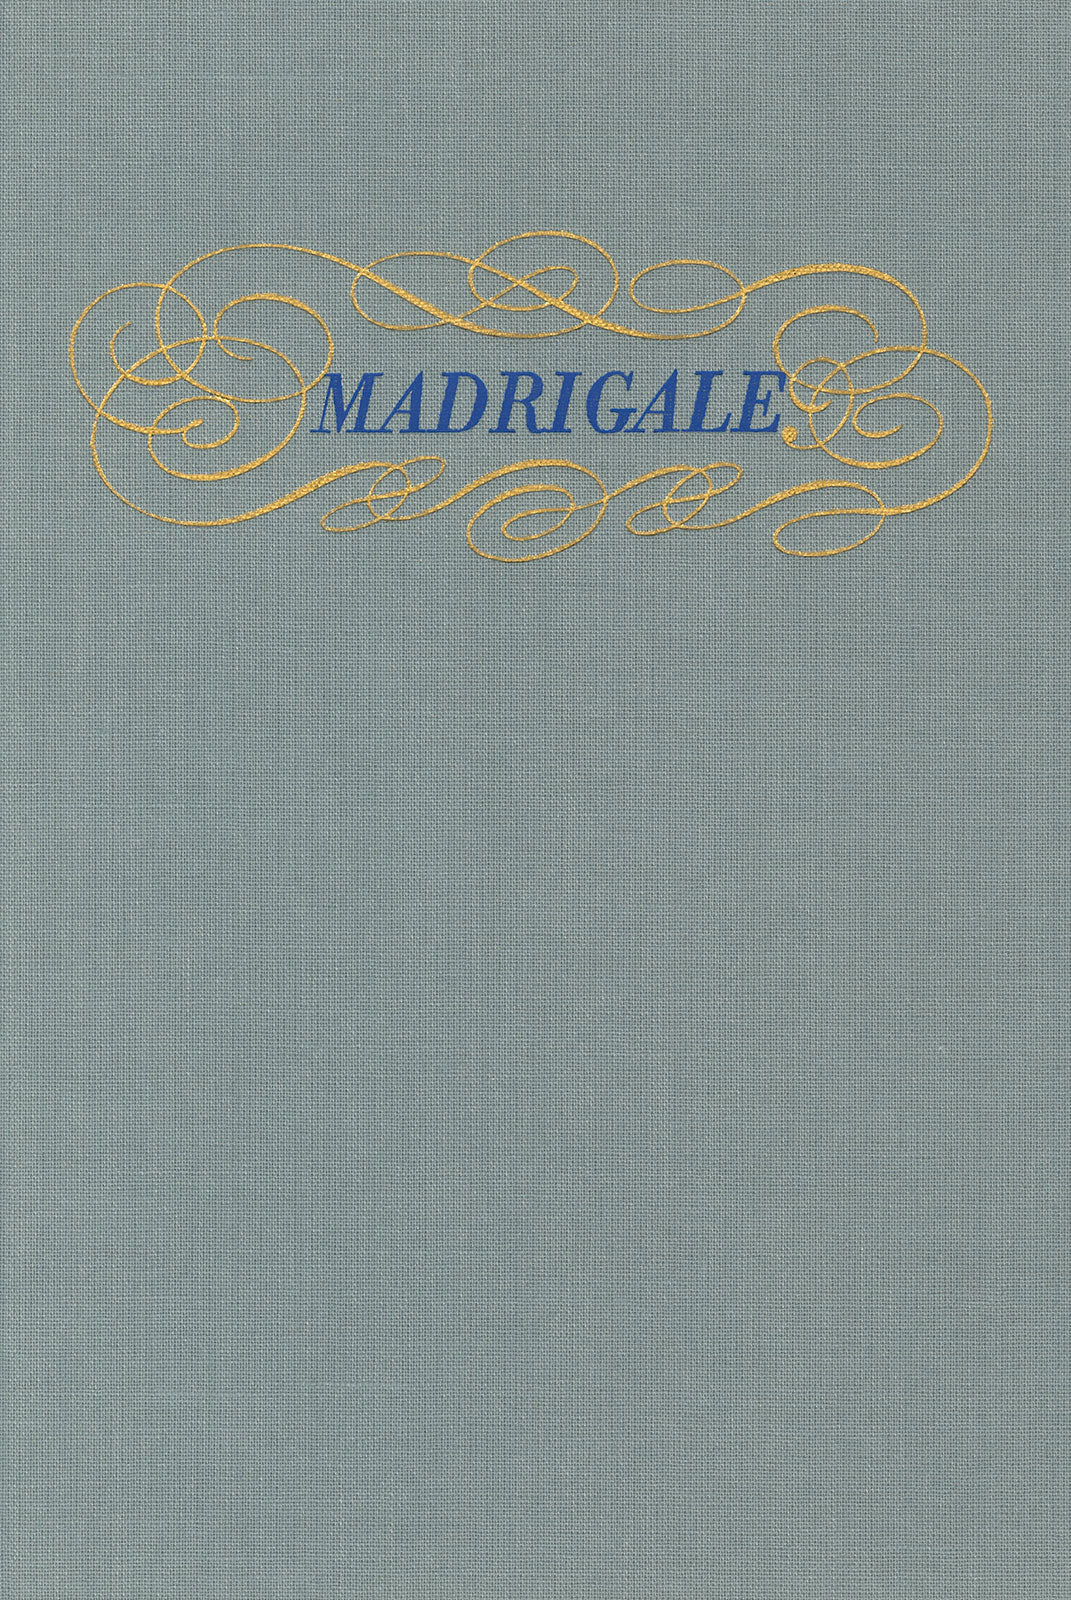 Gesualdo: Madrigals - Book 2 (Op. 2)